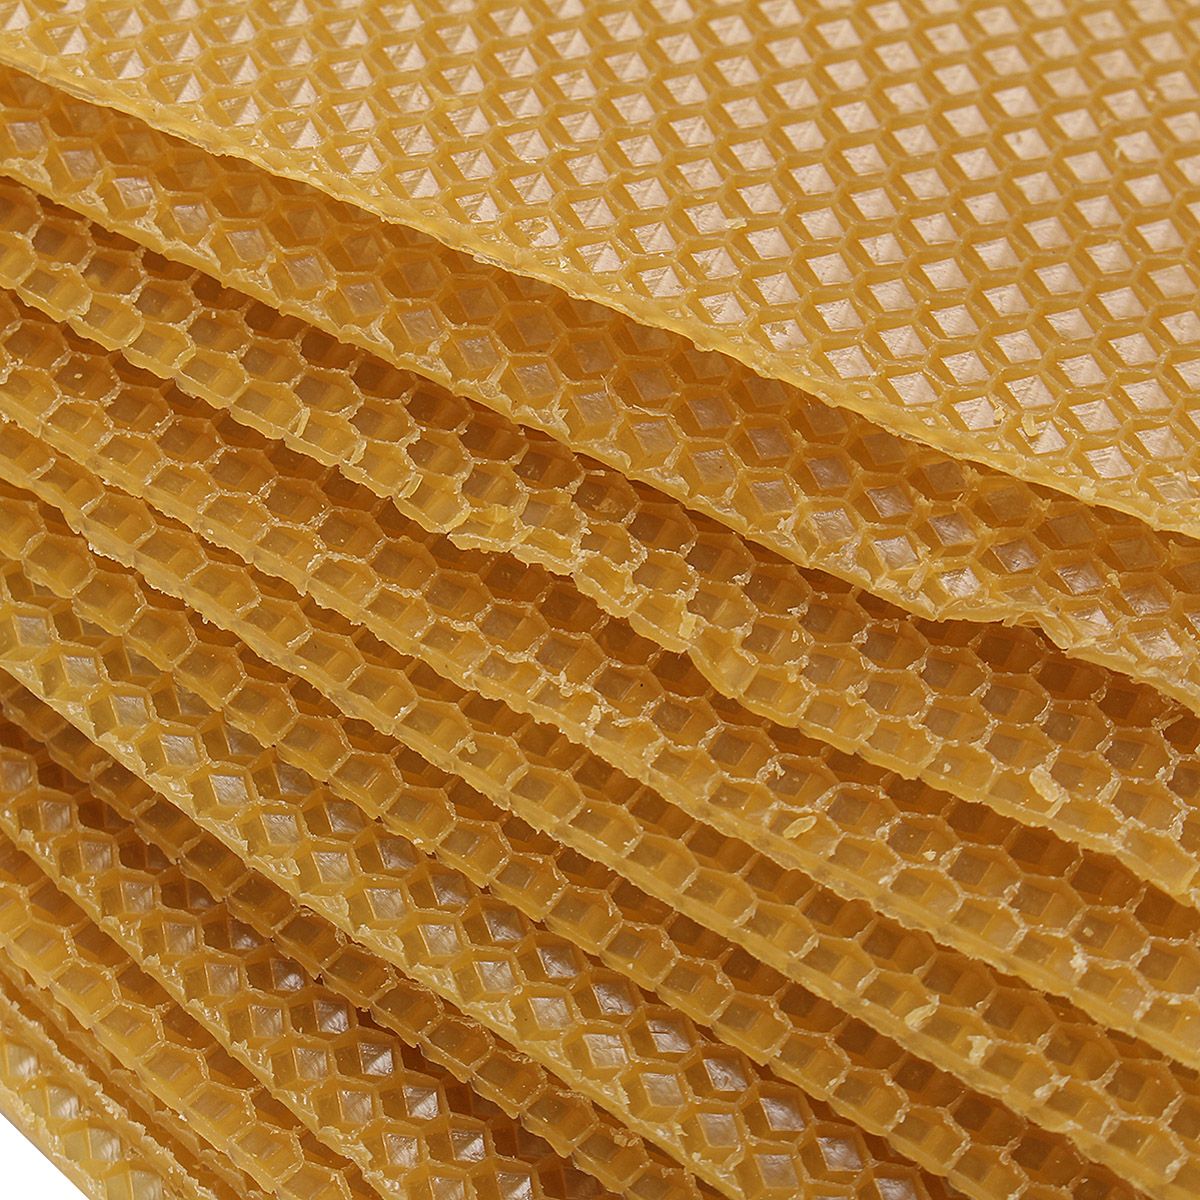 10Pcs-Honeycomb-Wax-Frame-Beekeeping-Foundation-Honey-Hive-Equipment-Tool-1395061